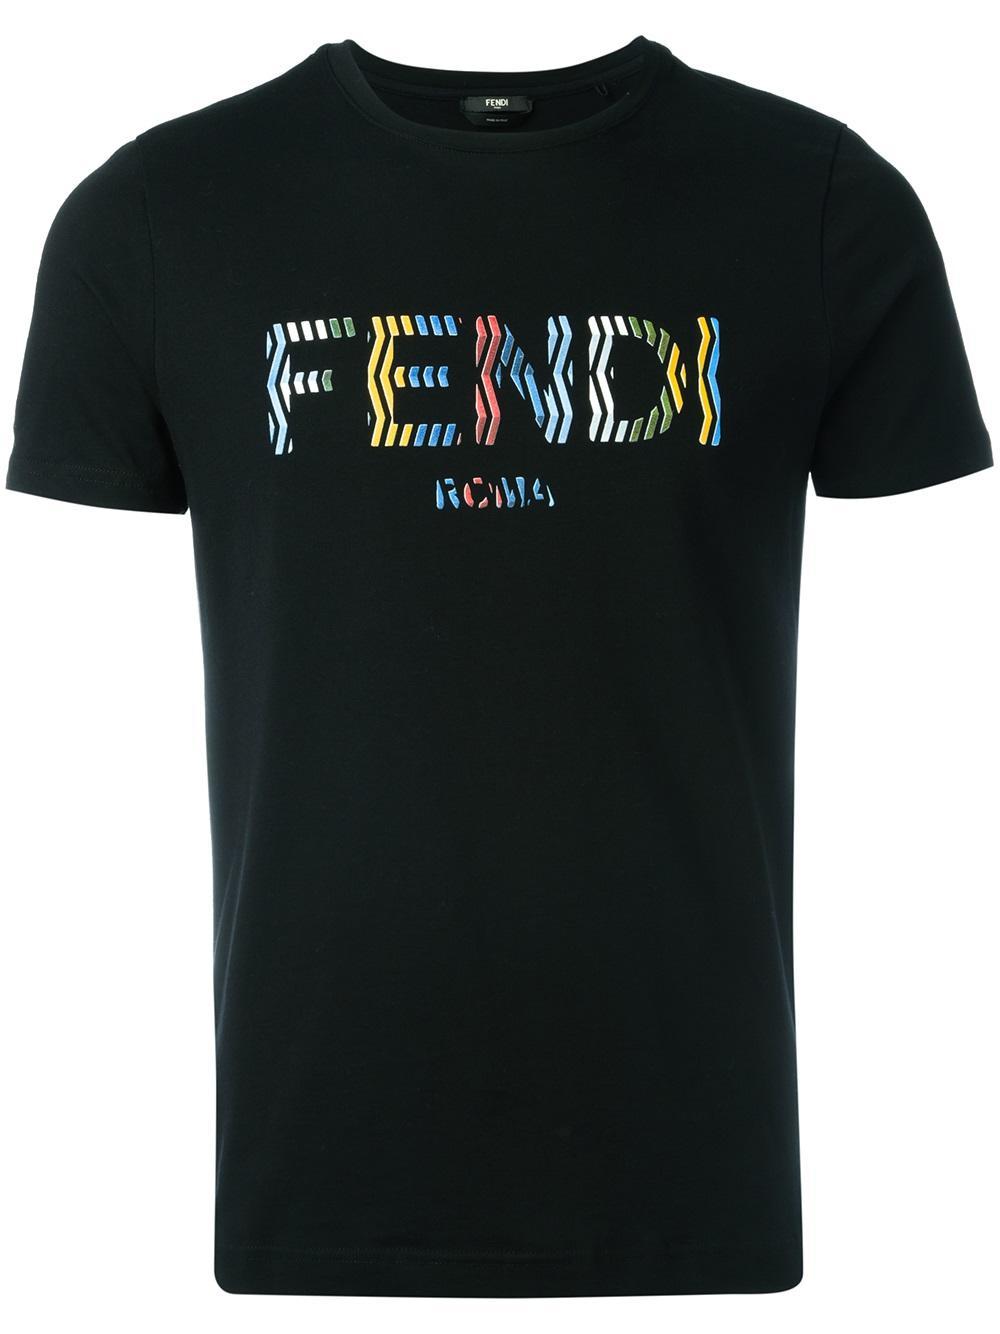 Fendi Cotton Roma T-shirt in Black for Men - Lyst